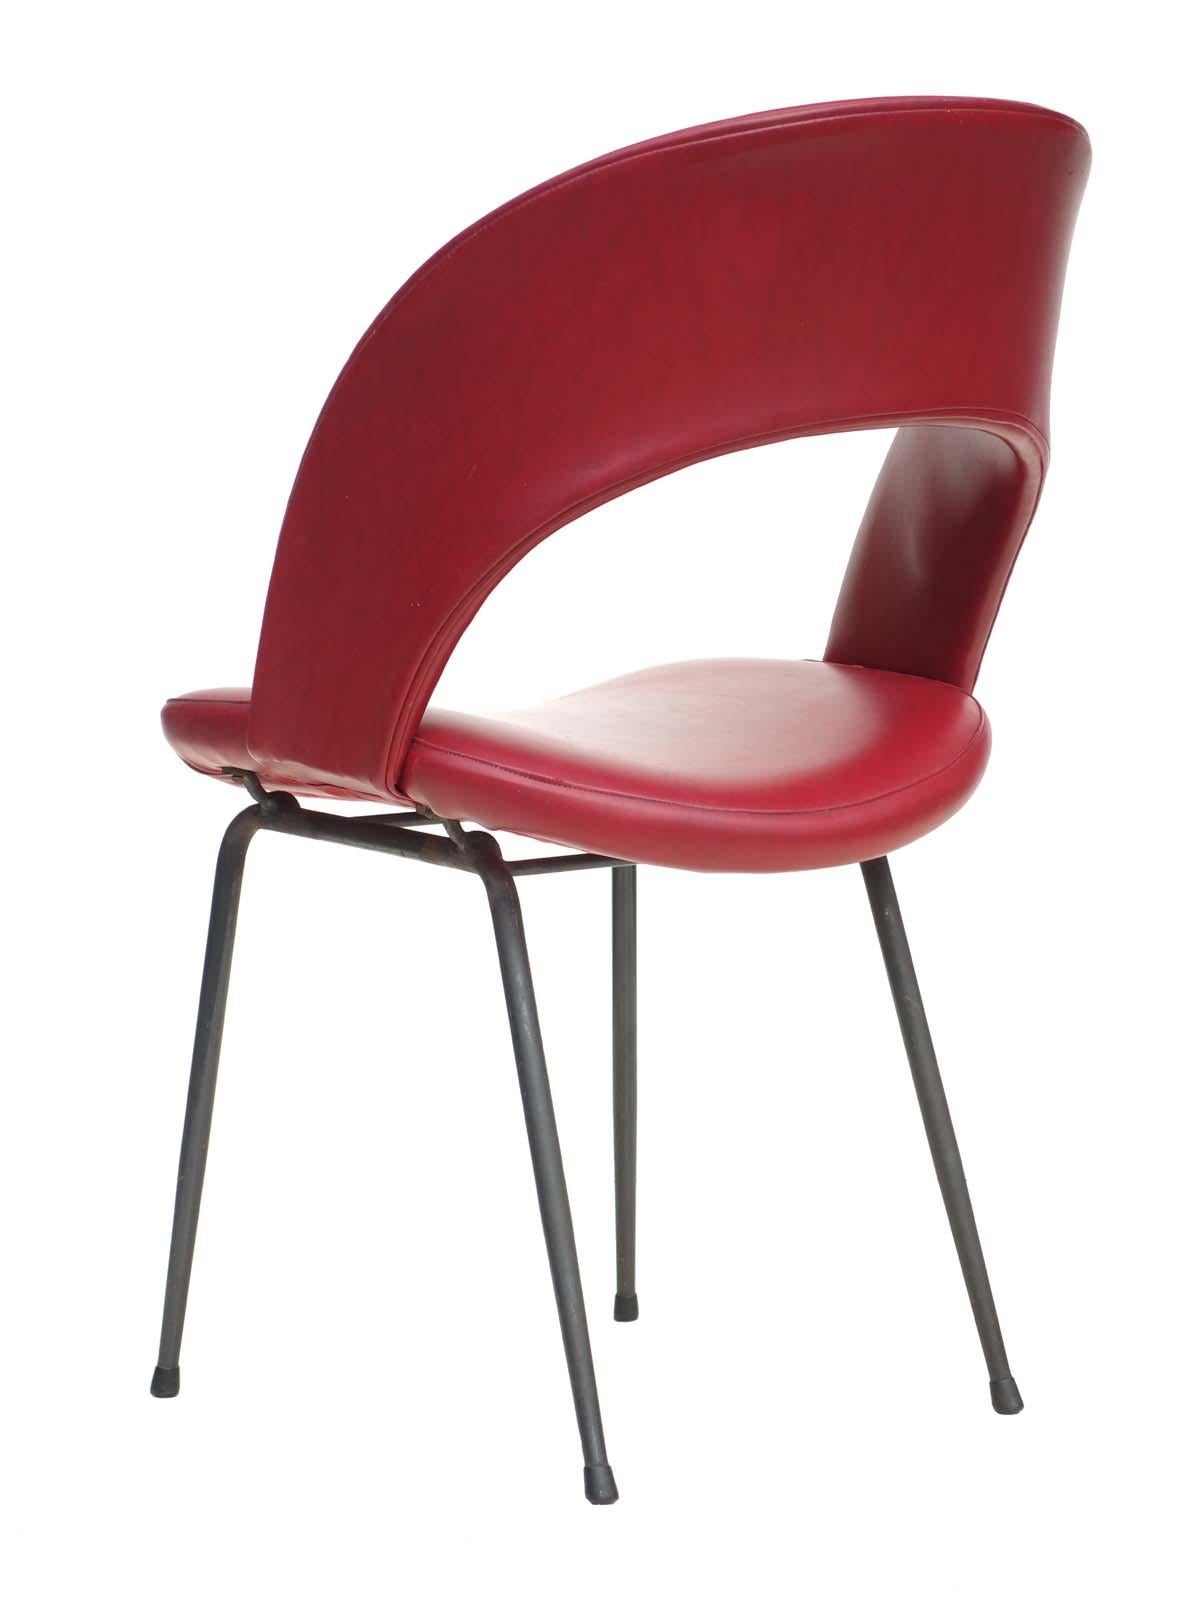 Mid-Century Modern 1950s by Gastone Rinaldi for RIMA Midcentury Italian Design Chair Set of 2 For Sale